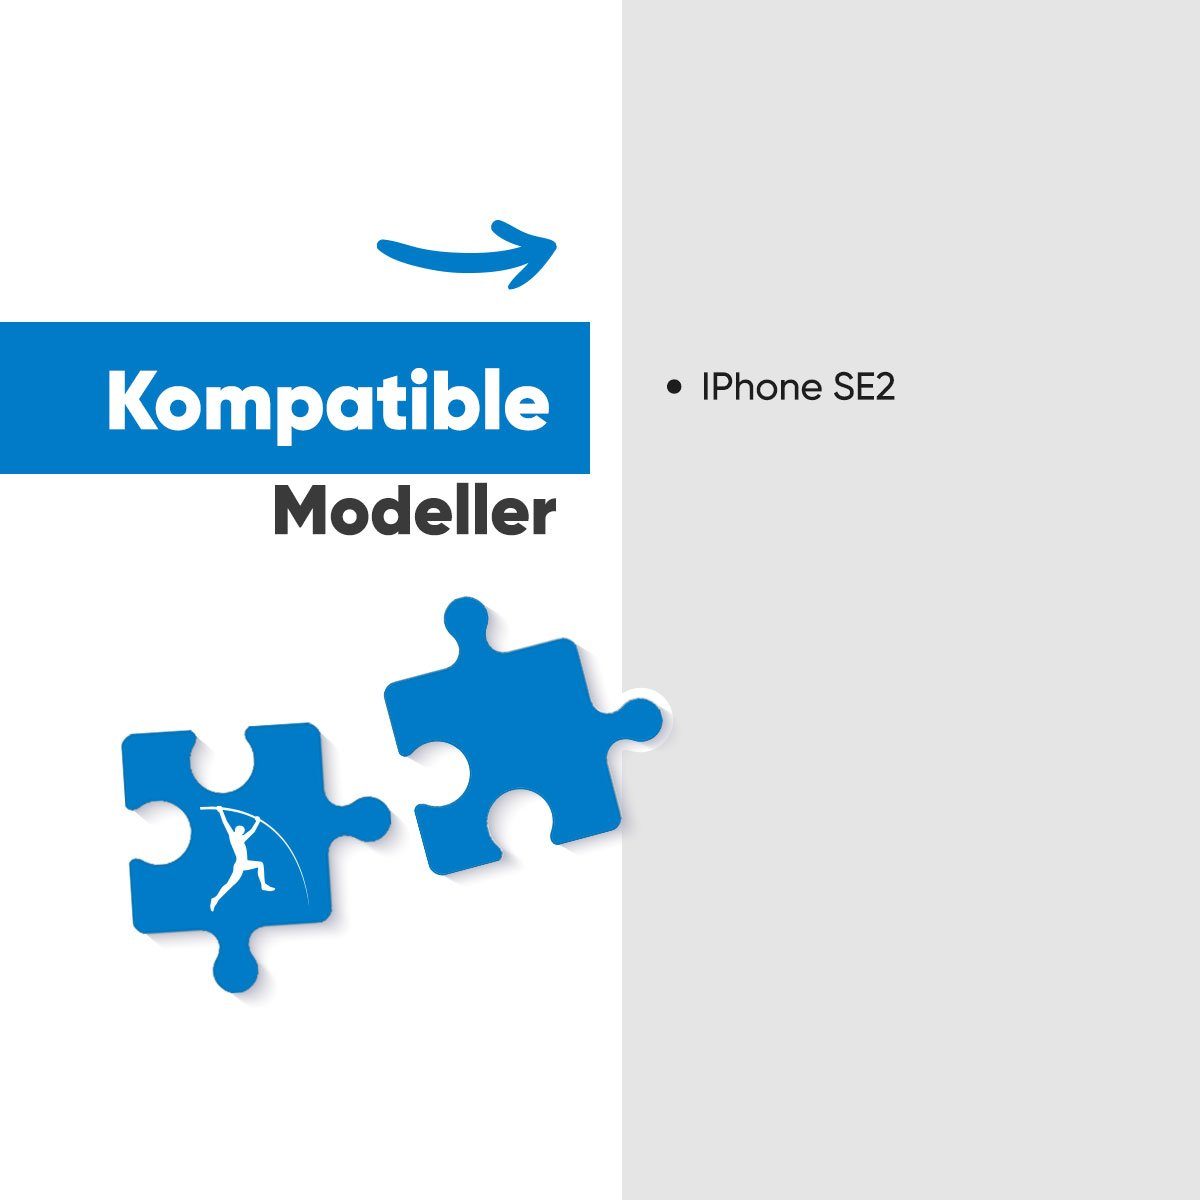 Woyax Wunderbatterie Akku für iPhone SE / Hohe Kapazität Handy-Akku 2020 2210mAh